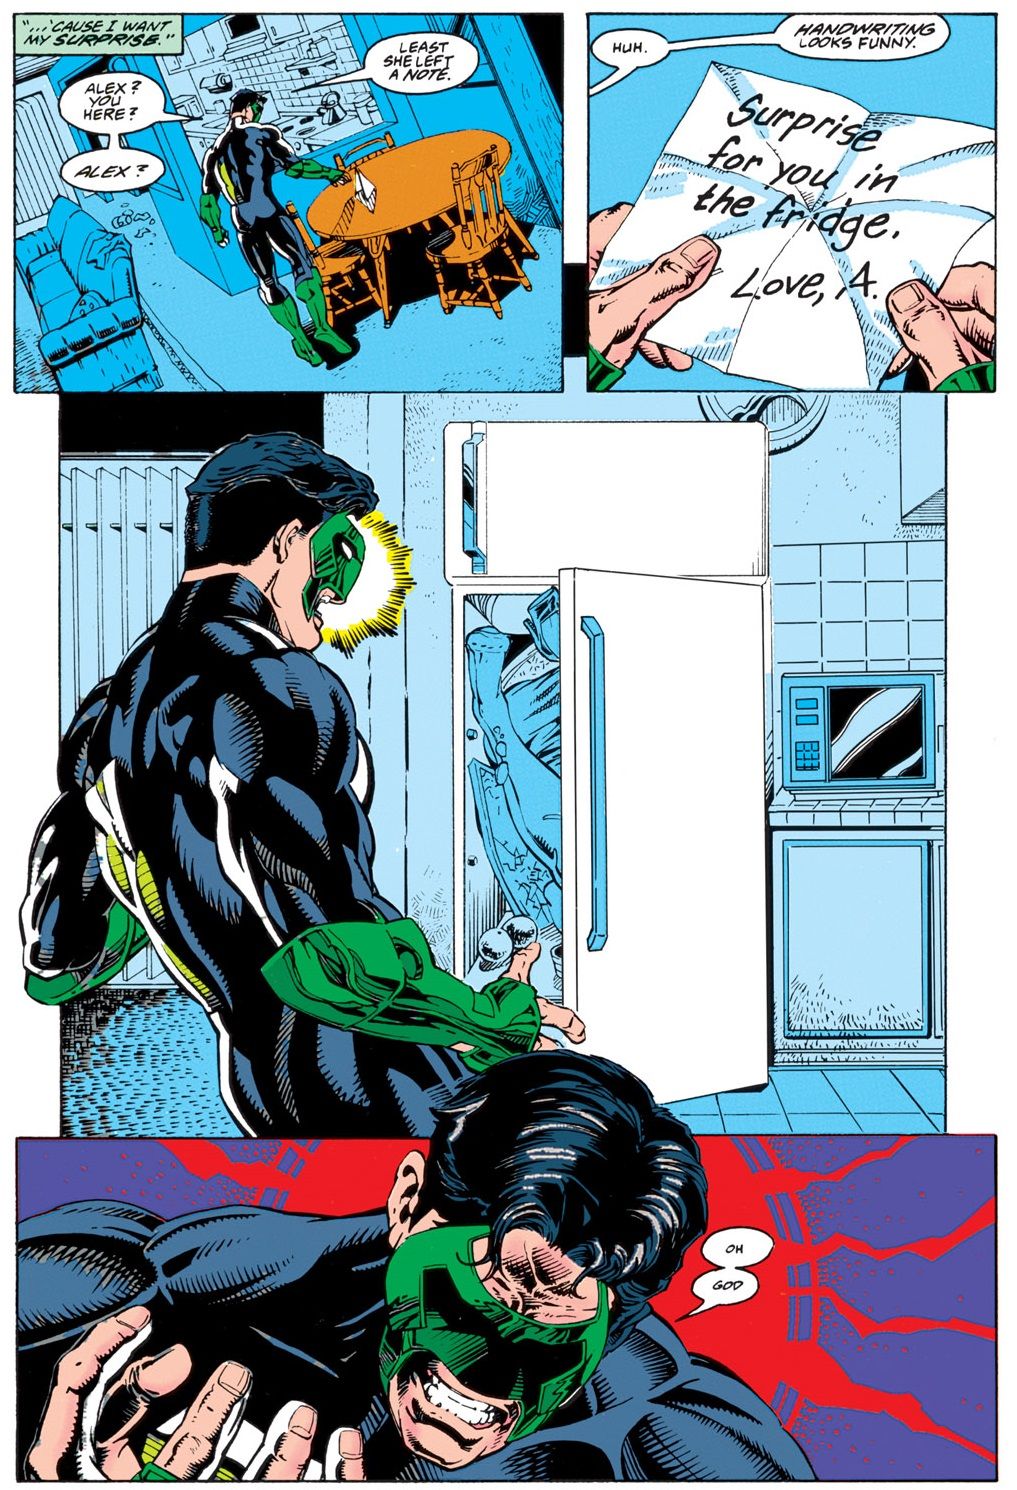 Green Lantern discovers his dead girlfriend